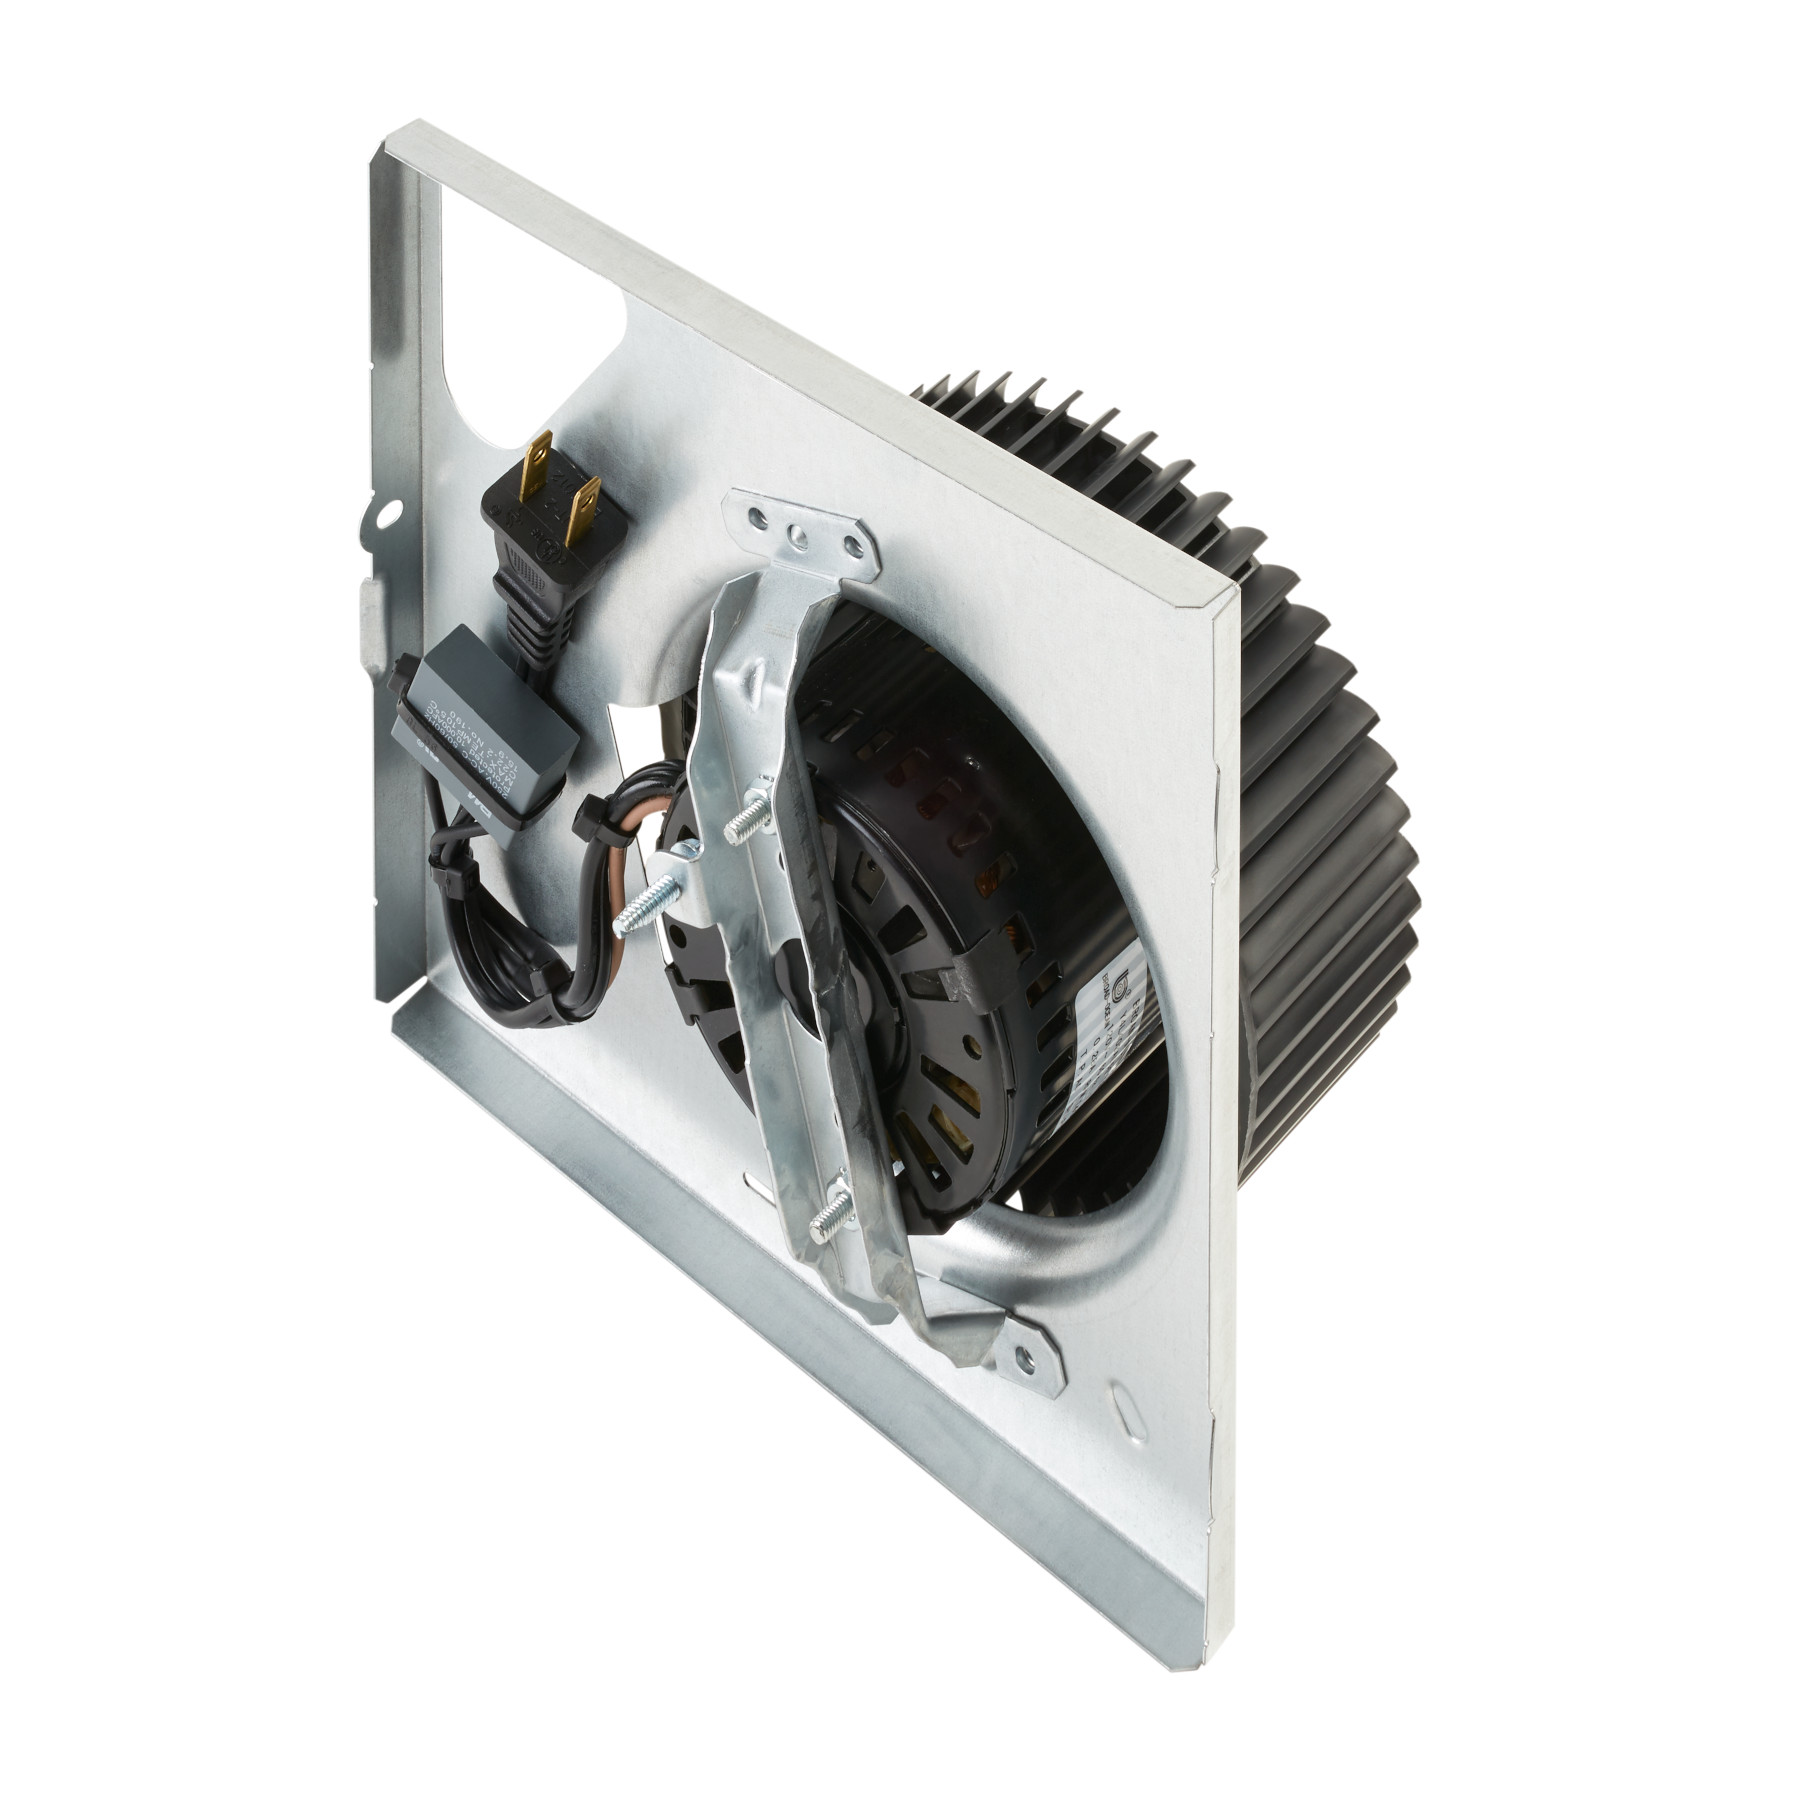 Broan-NuTone® 80 CFM Quick Install Bath Fan Motor Upgrade for 8" x 8-1/4" x 5-3/4" housings